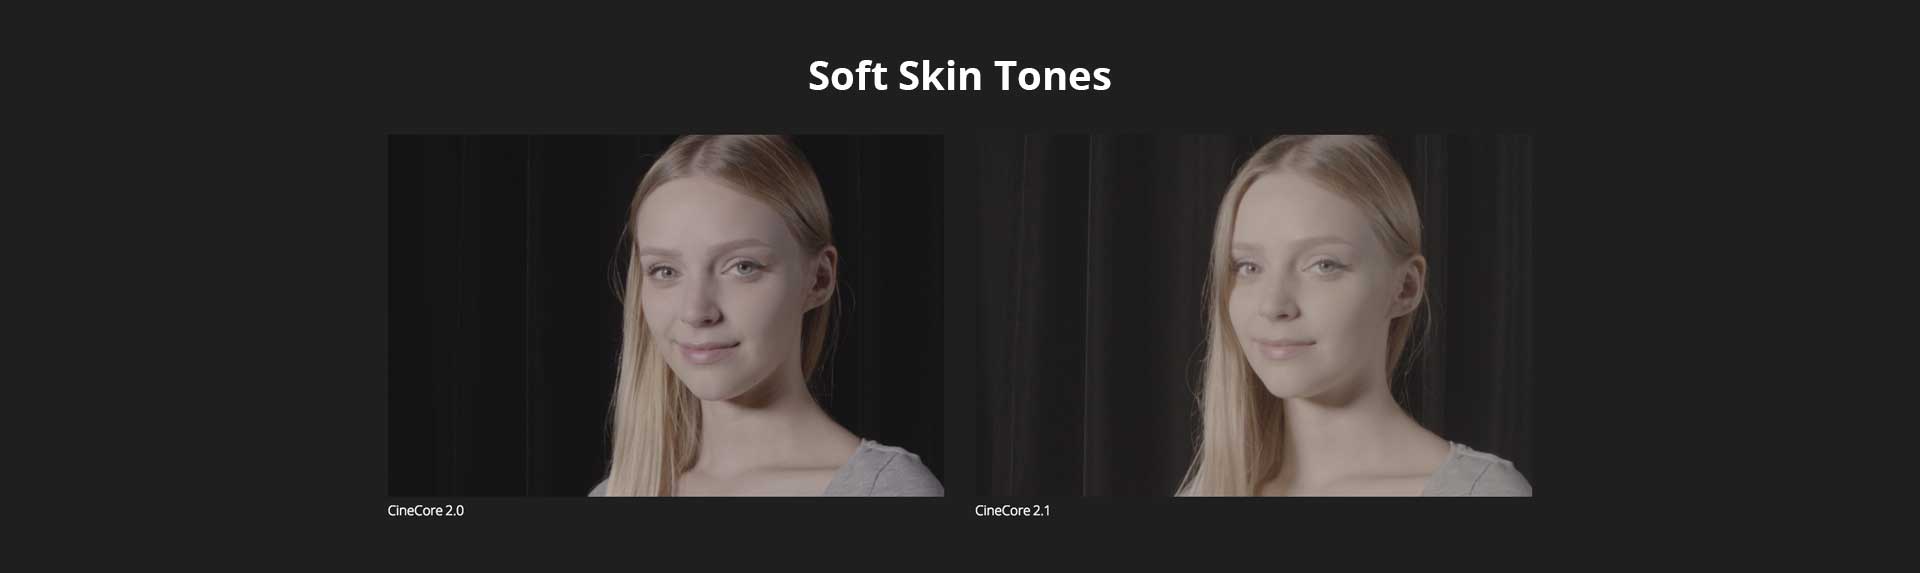 DJI Zenmuse X7 Soft Skin Tones